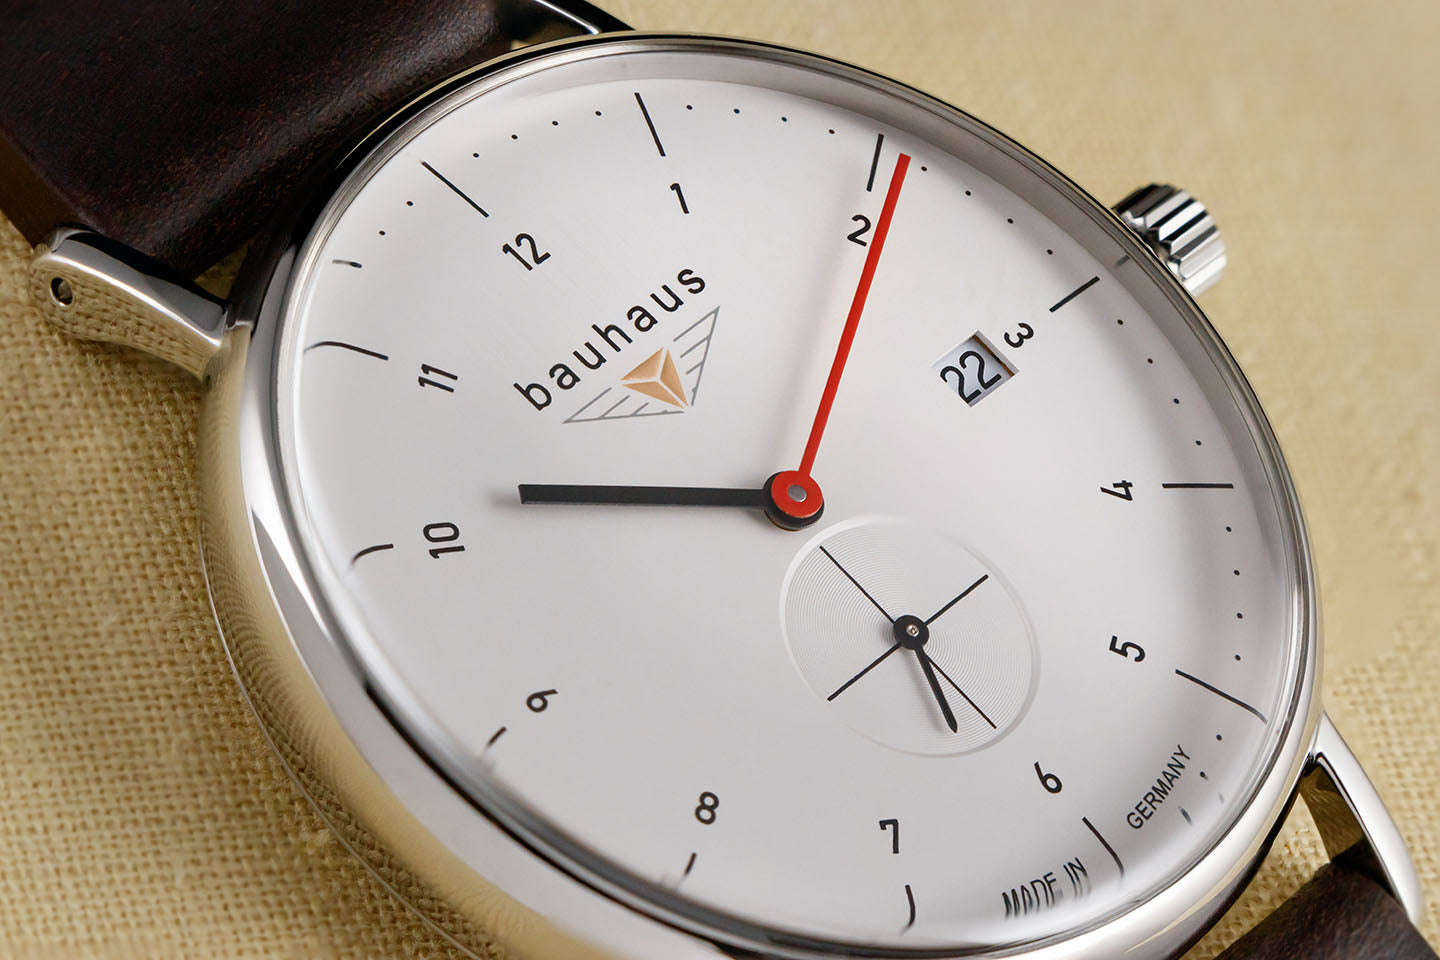 Bauhaus 2140-4 Men's Watch Swiss Movement with Date display